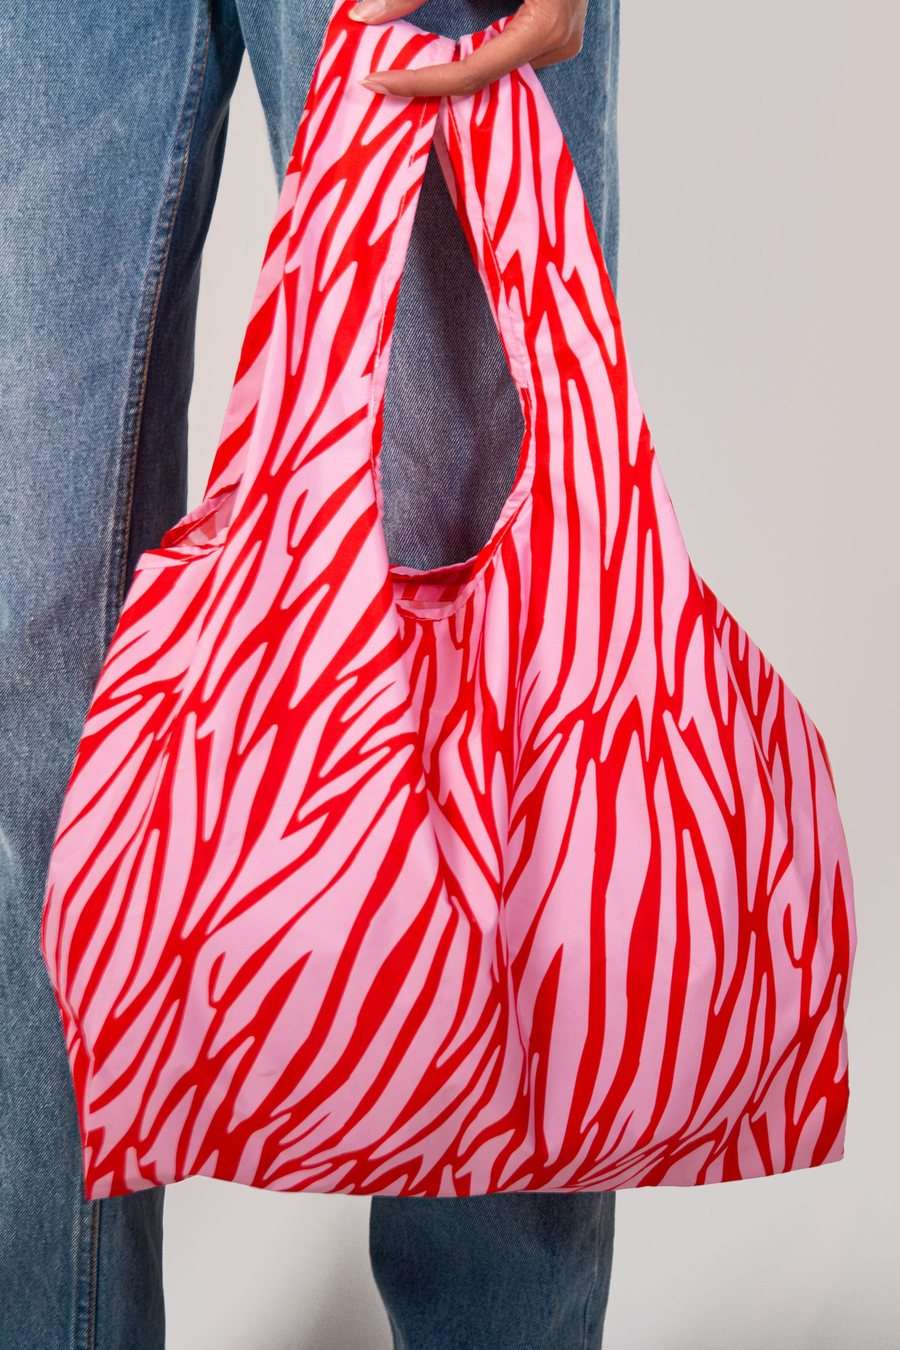 100% Recycled Shopping Bag - Zebra